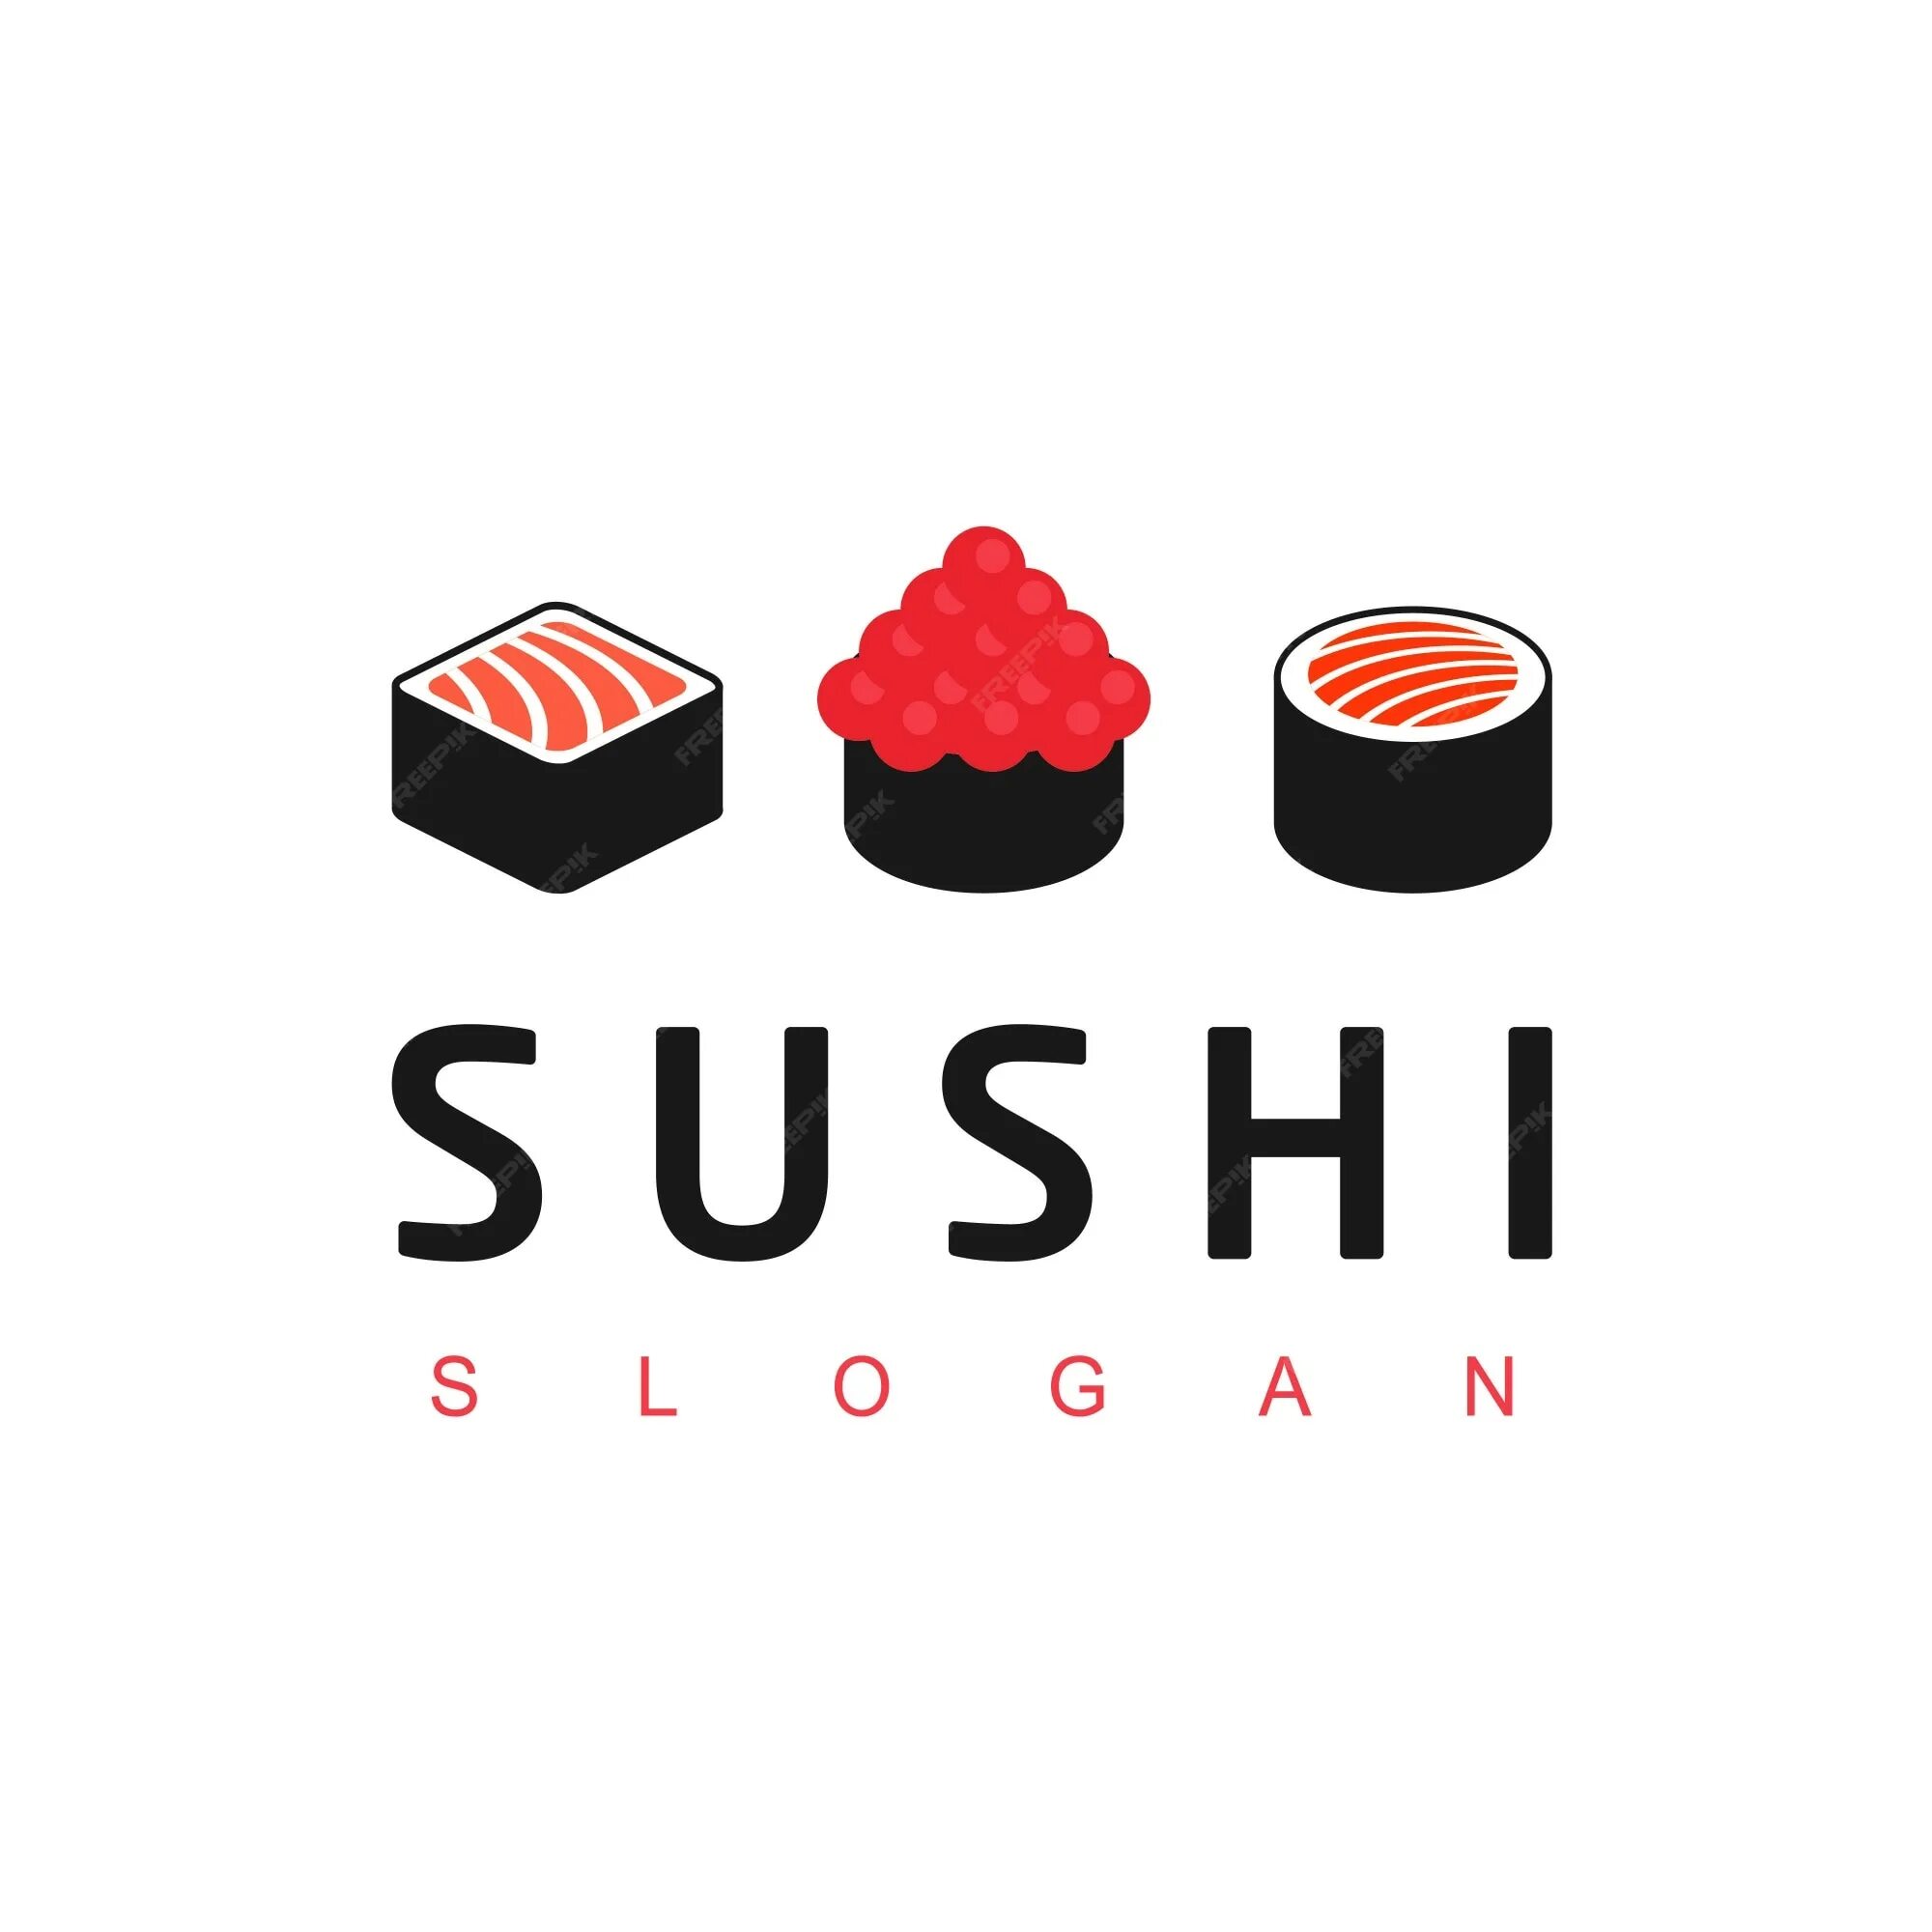 Суши лайк. Логотип суши. Логотипы суши баров. Логотип суши роллы. Логотипы суши ресторанов.